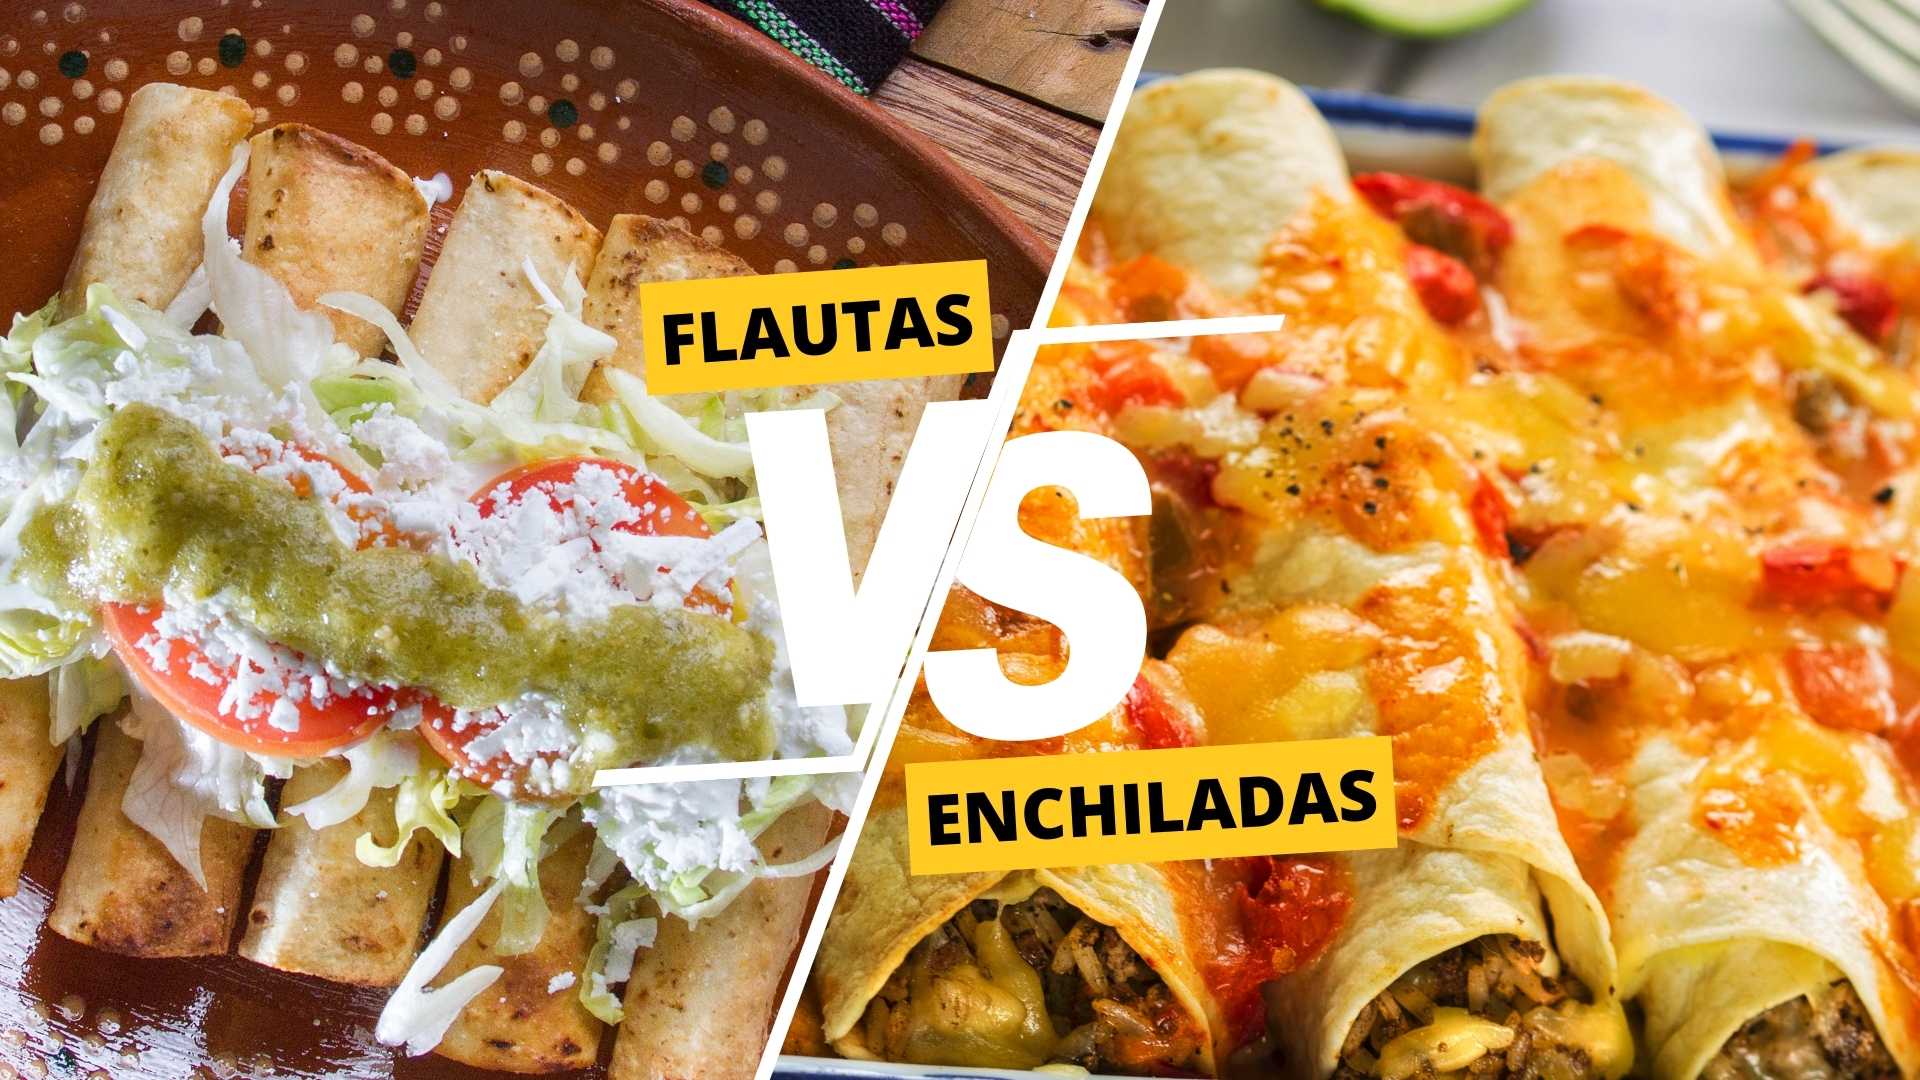 Flautas vs Enchiladas